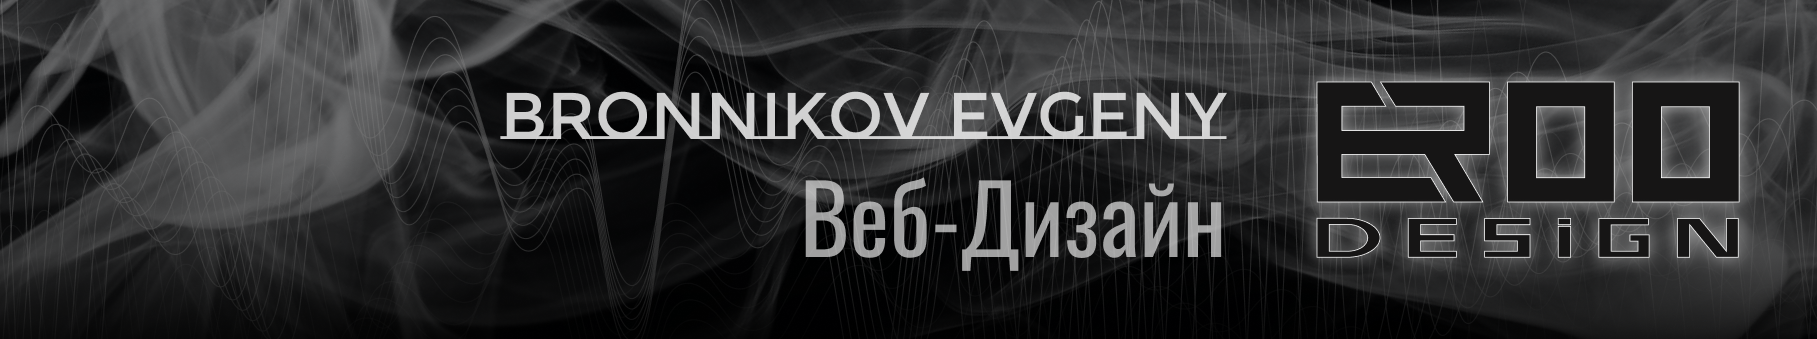 Евгений Бронников's profile banner